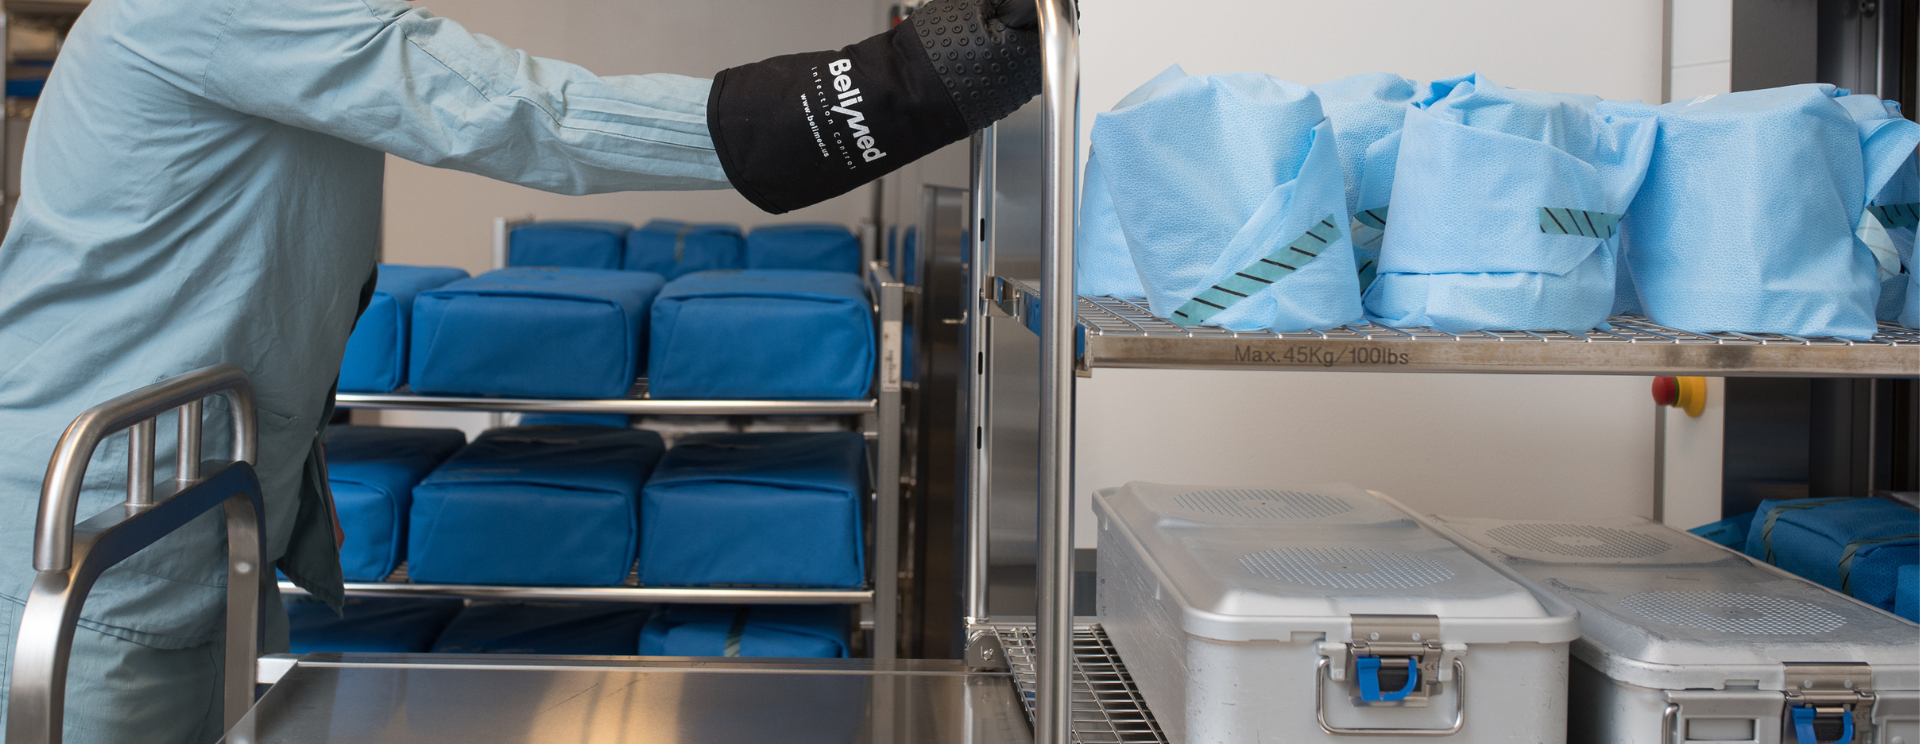 Unloading & Loading Techniques for your Sterilization Equipment